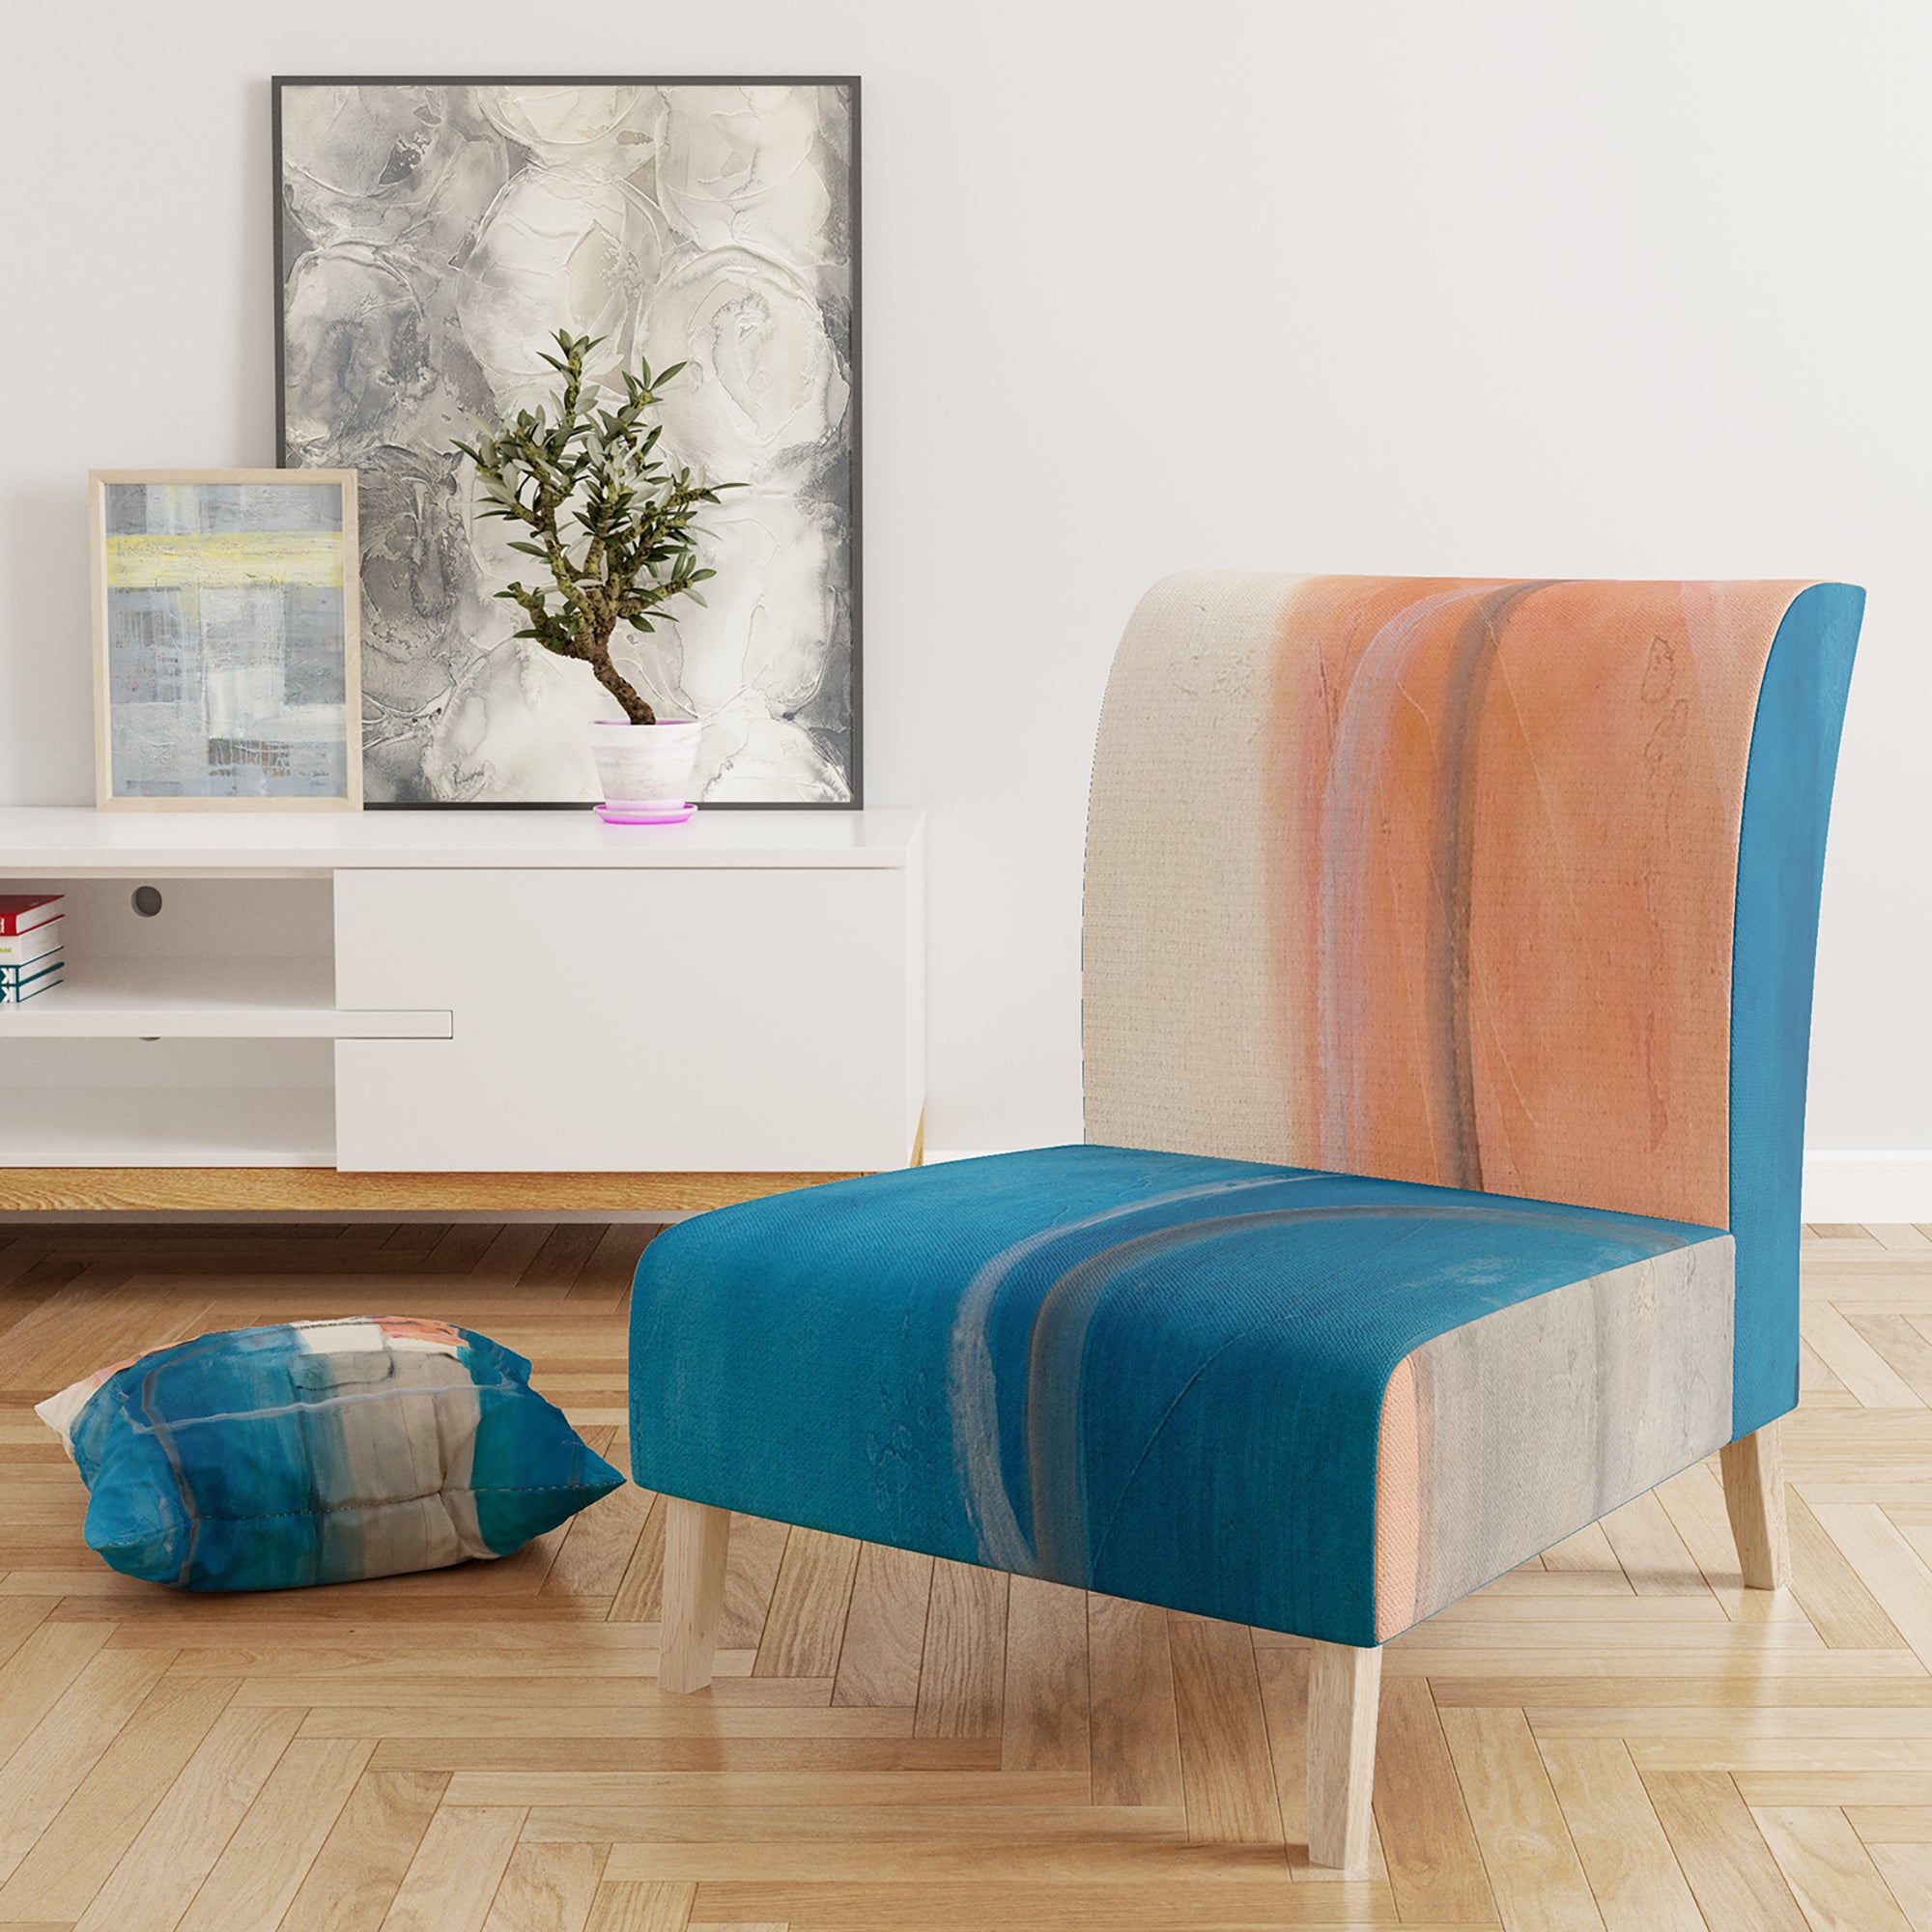 Designart 'Modern Simply Blue' Mid-Century Accent Chair